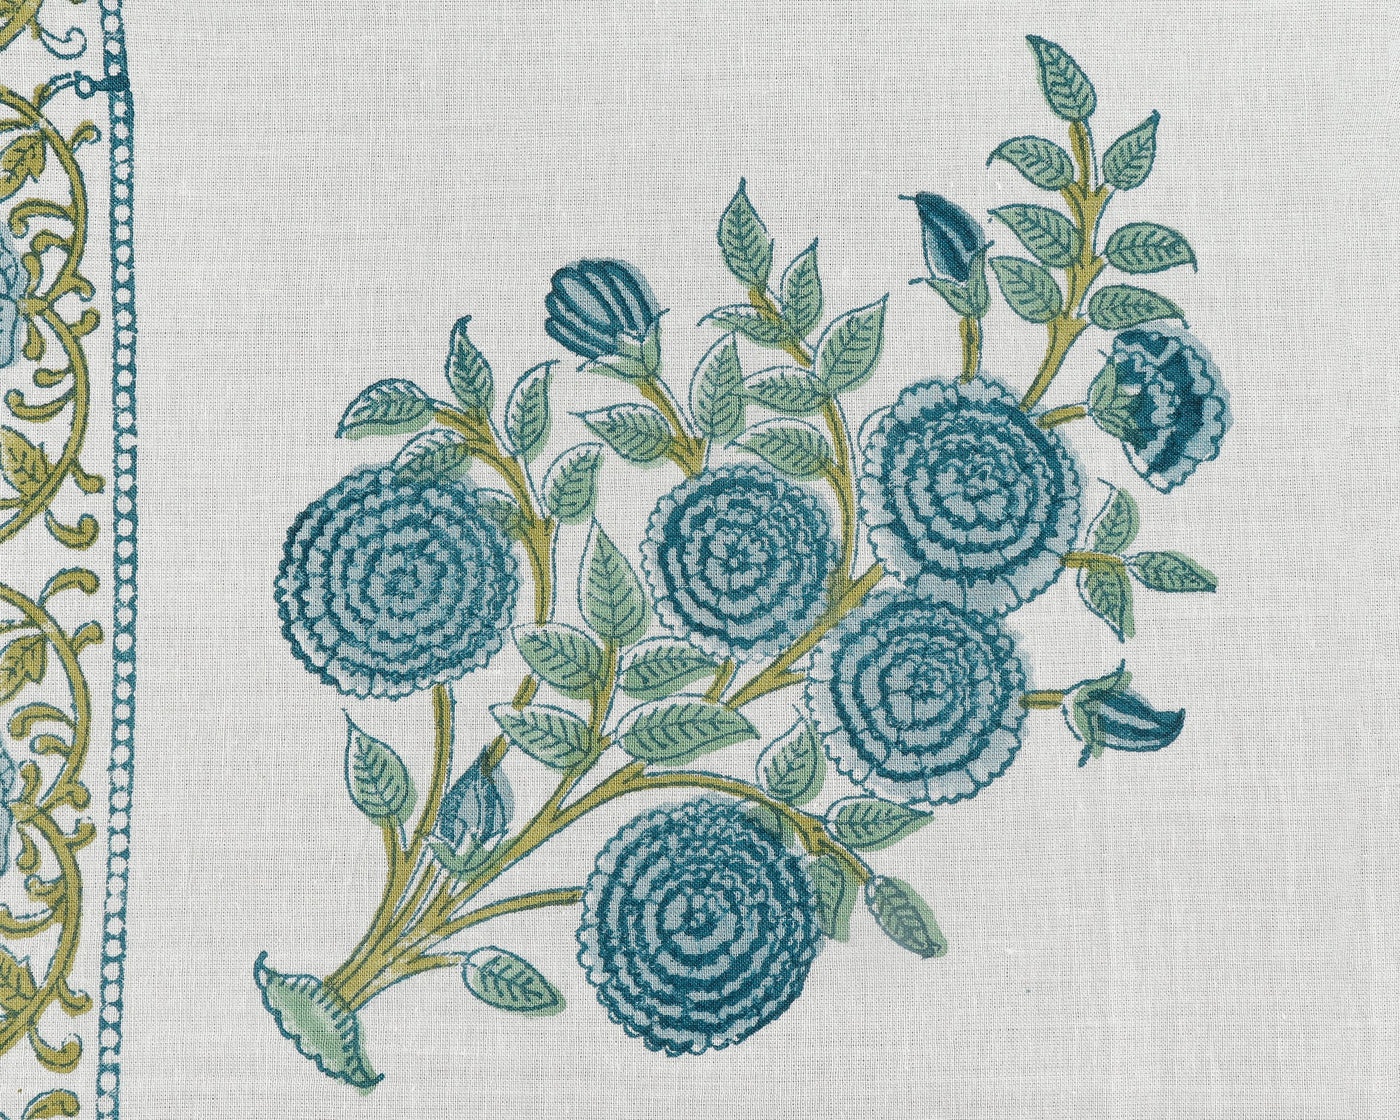 Fabricrush Blue Indian Floral Hand Block Printed 100% Pure Cotton Cotton Border Napkins, Size-20x20", Soft Eco Friendly Table Decor, Wedding Decor, Home Decor, Home and Living